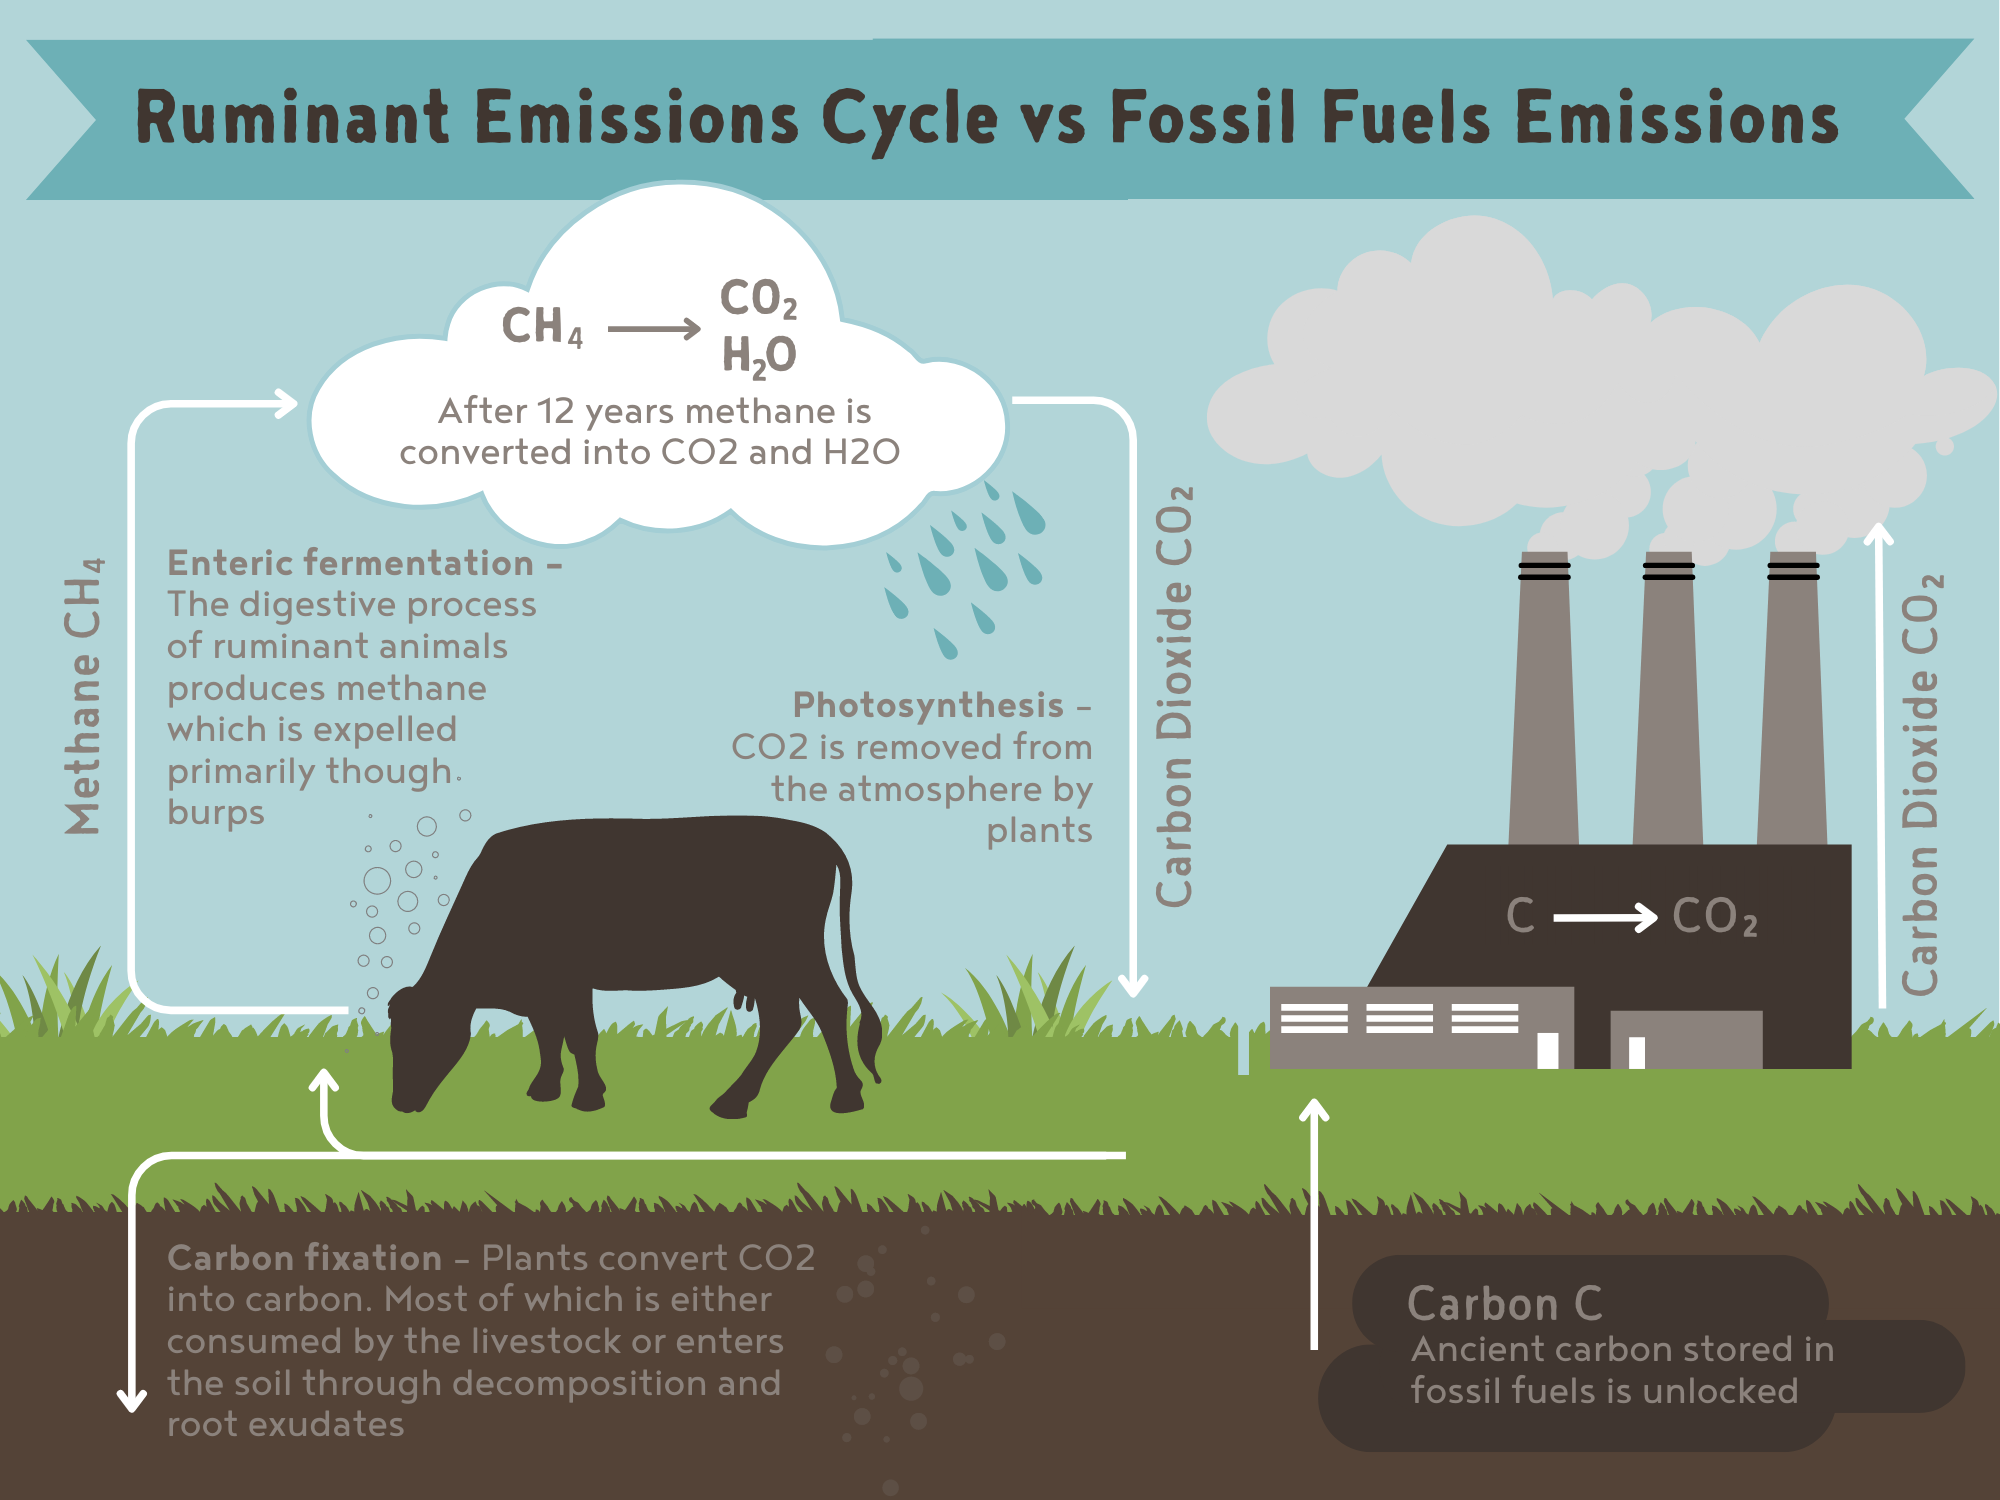 Ruminant Emissions Cycle vs Fossil Fuels Emissions (2)